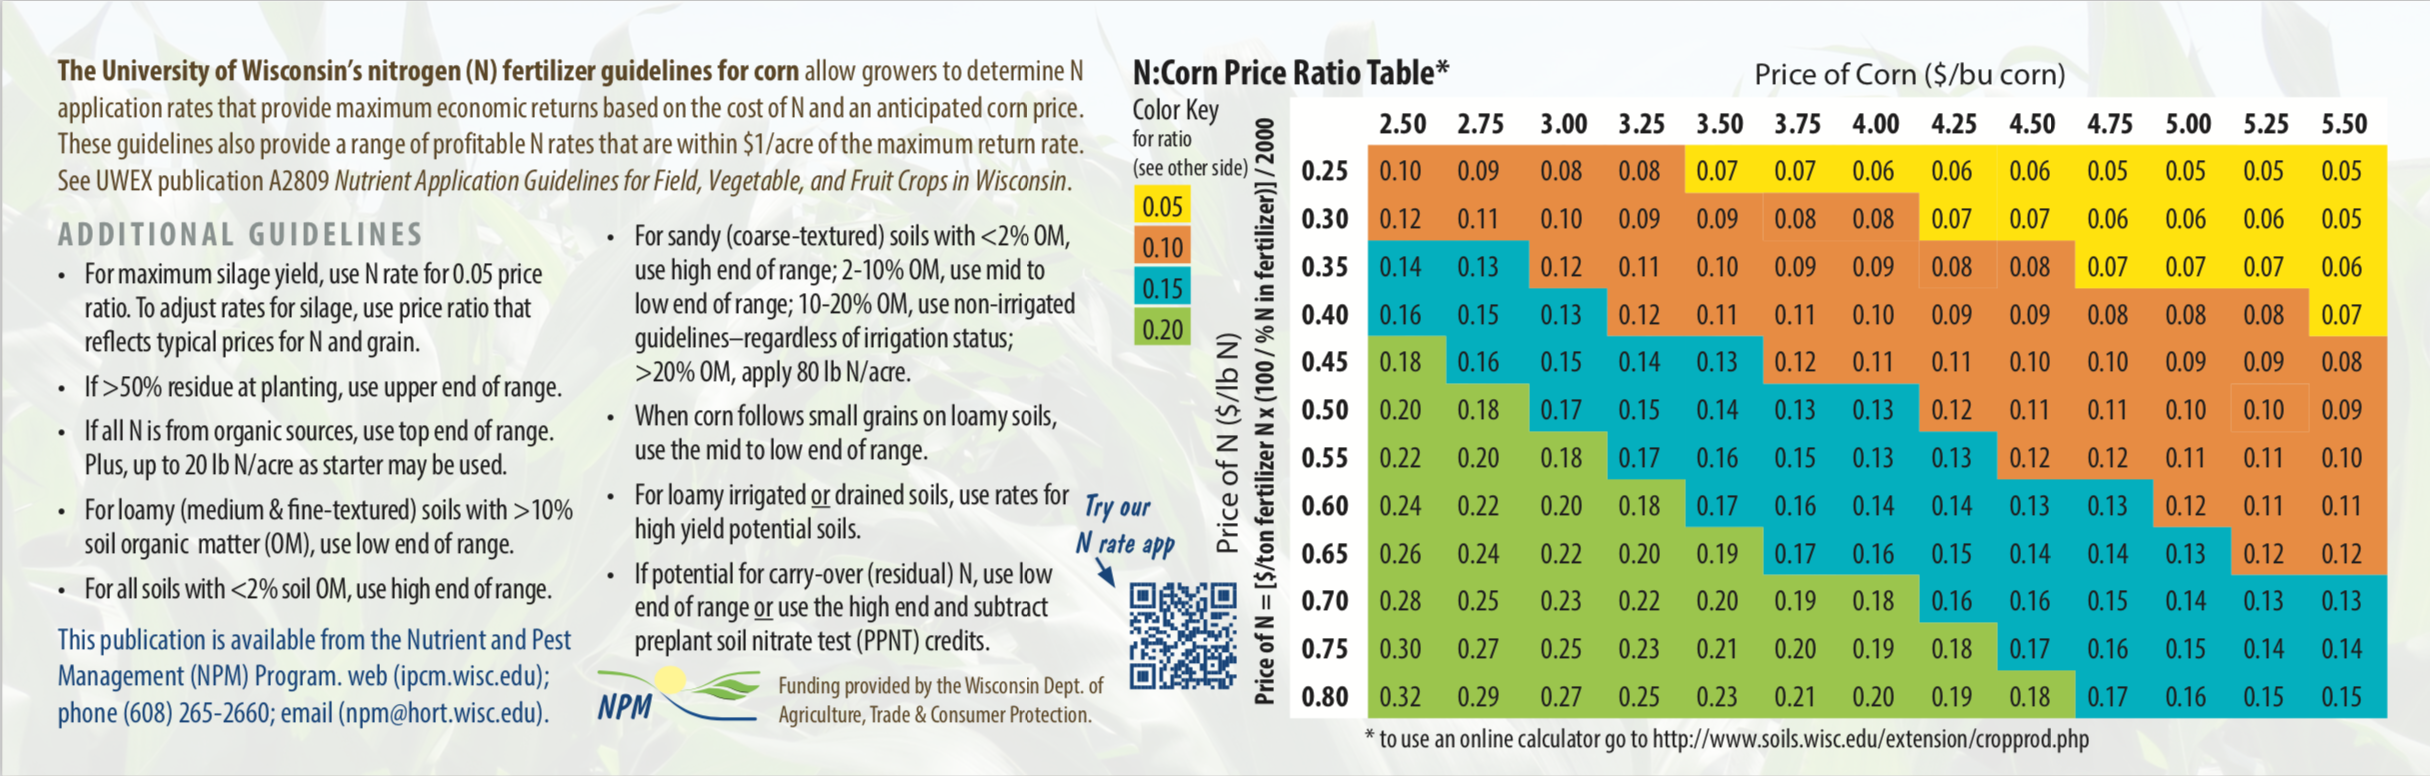 MRTN_corn_pricing